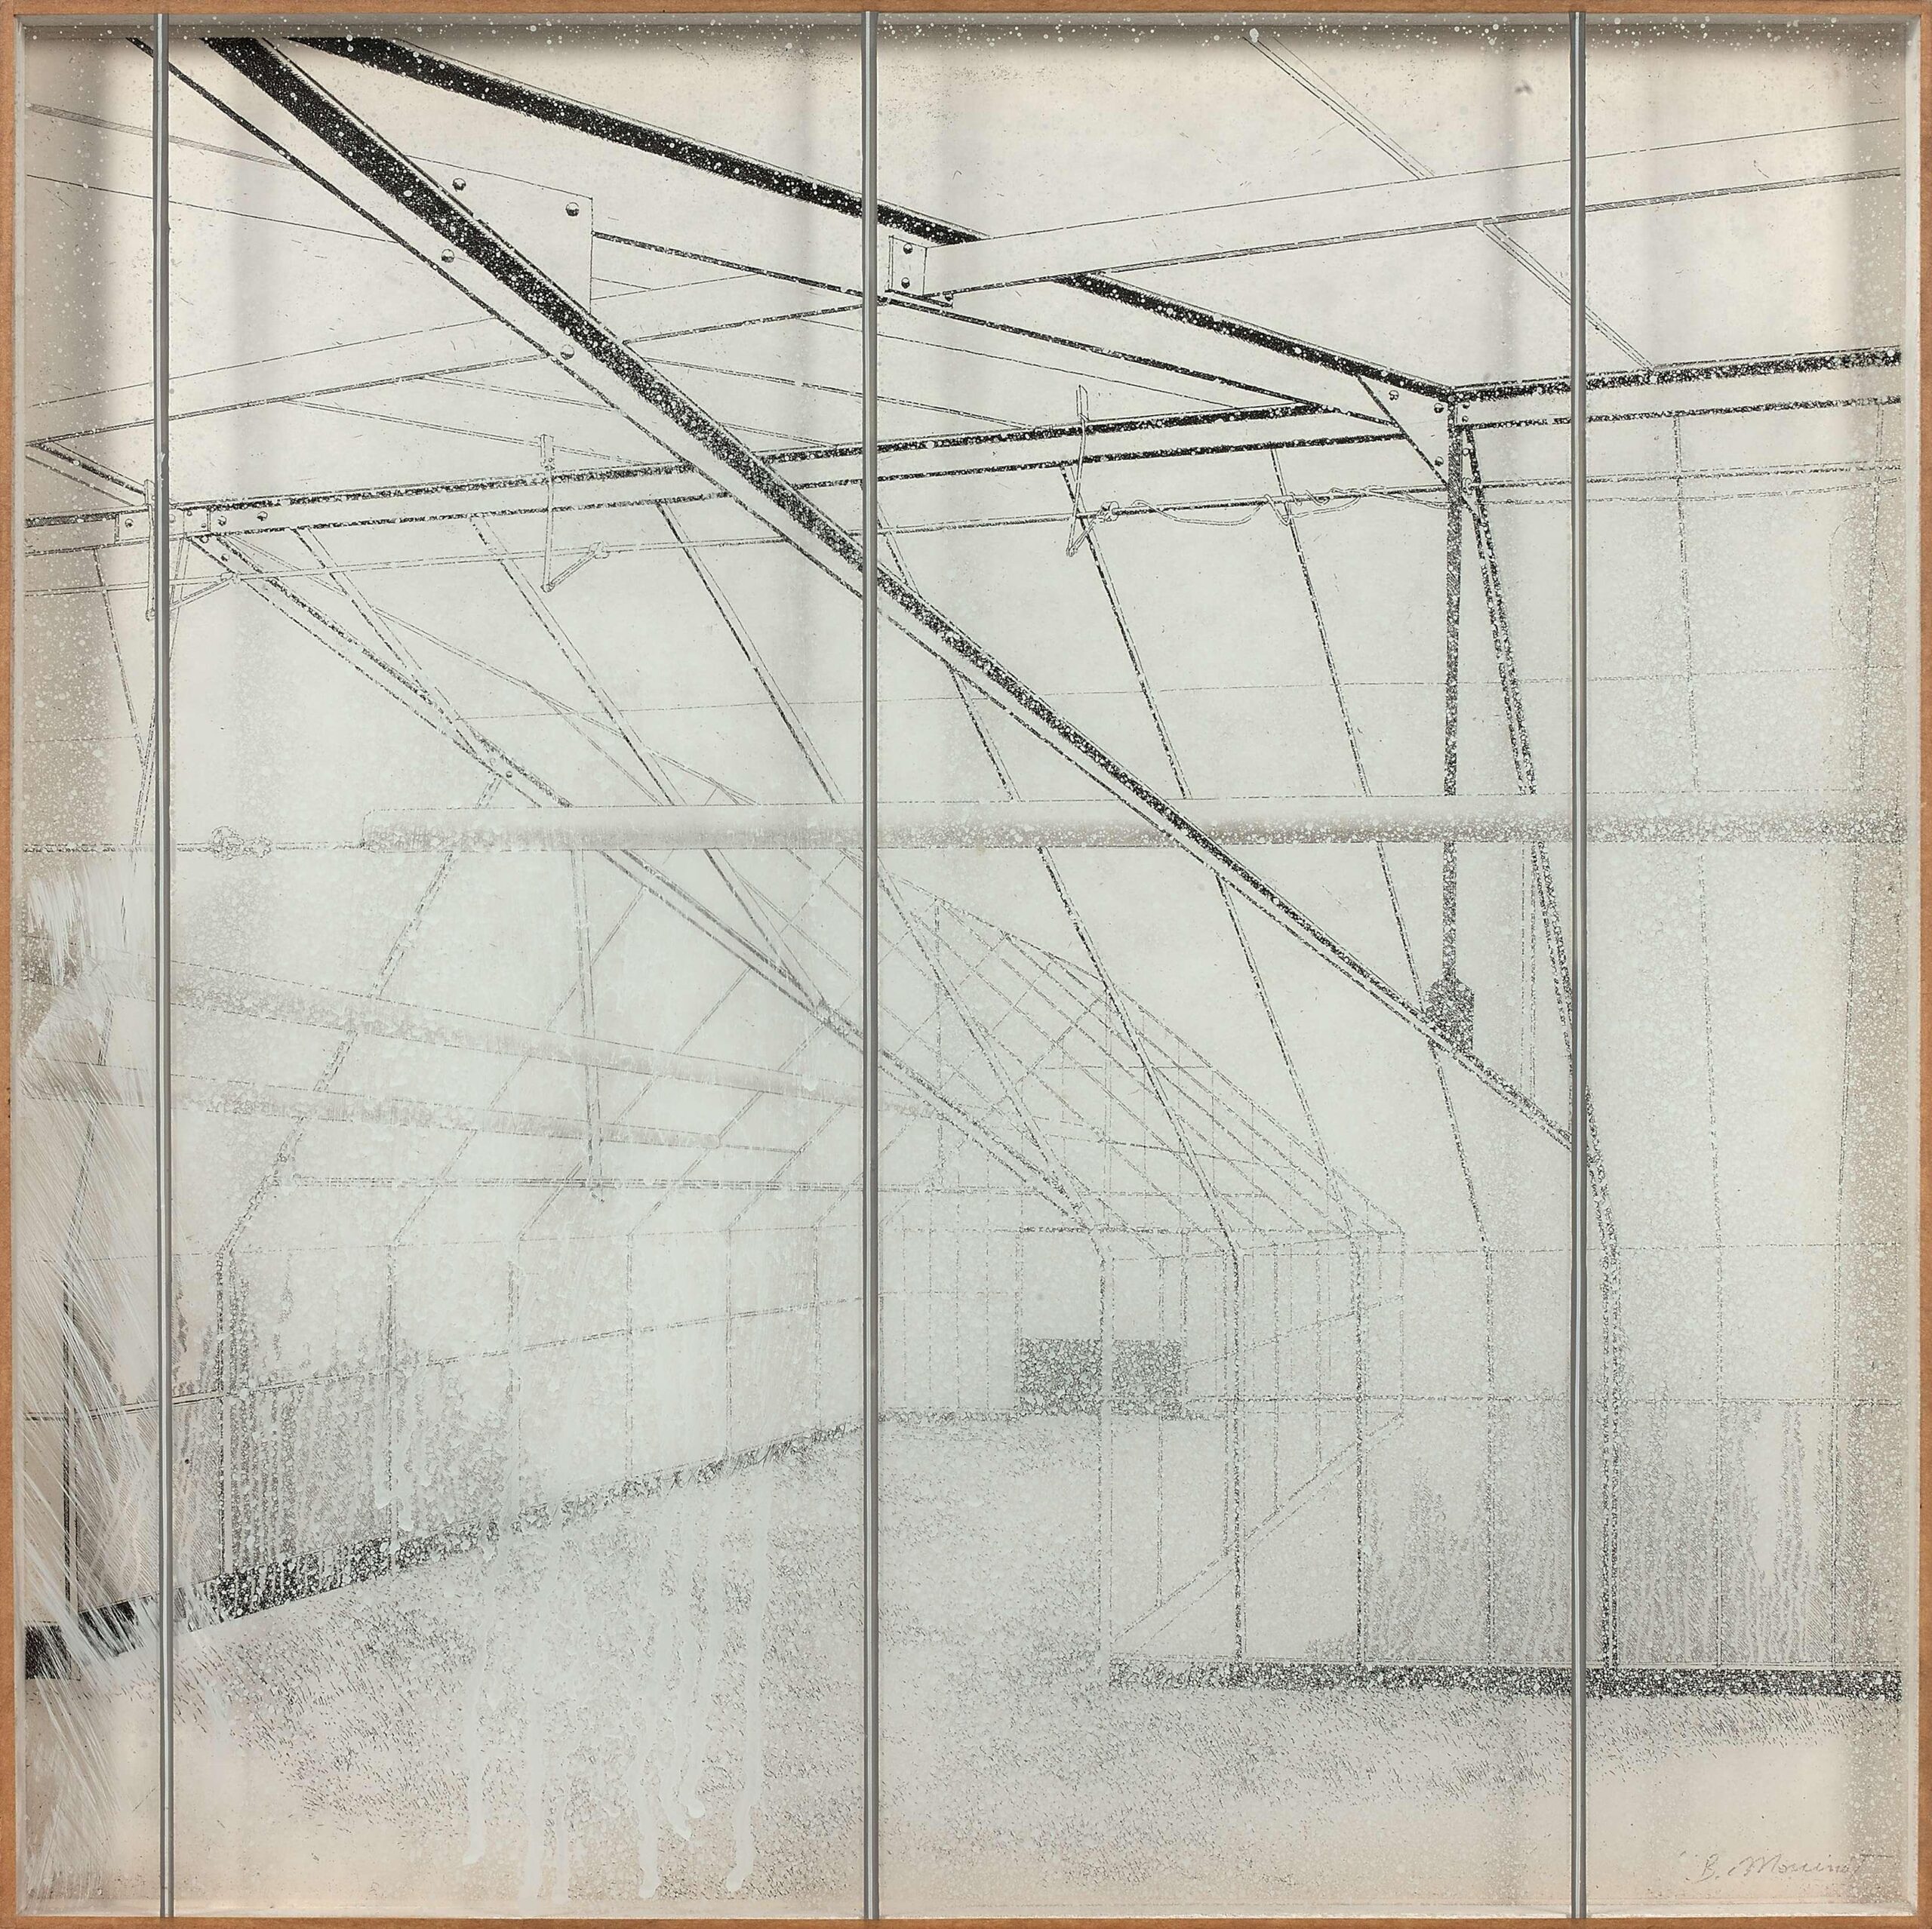 Poetics of the Greenhouse: Works by Bernard Moninot – SOCKS